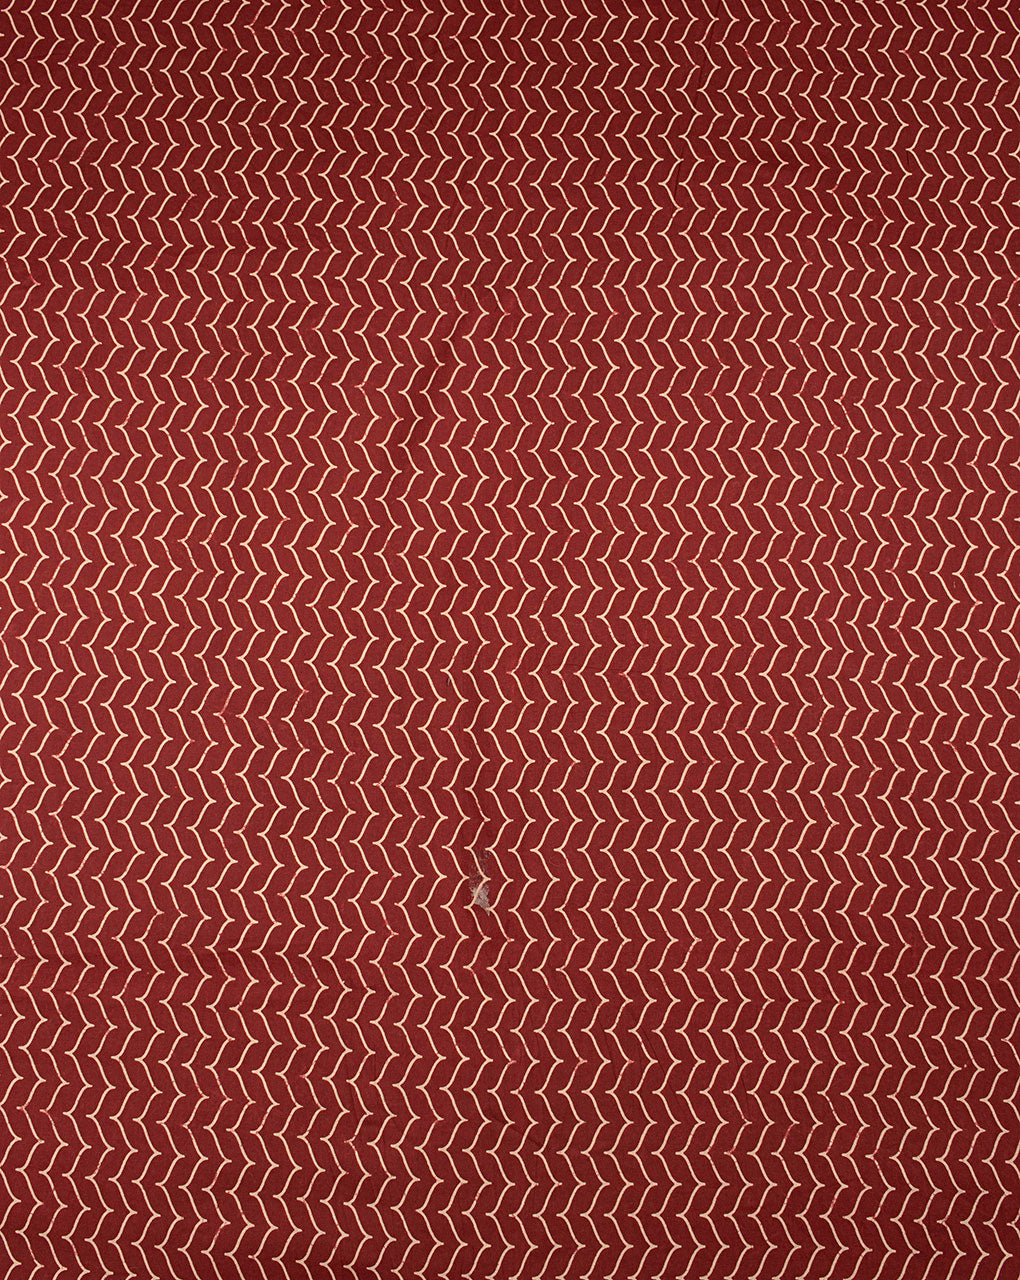 Chevron Screen Print Cotton Fabric - Fabriclore.com